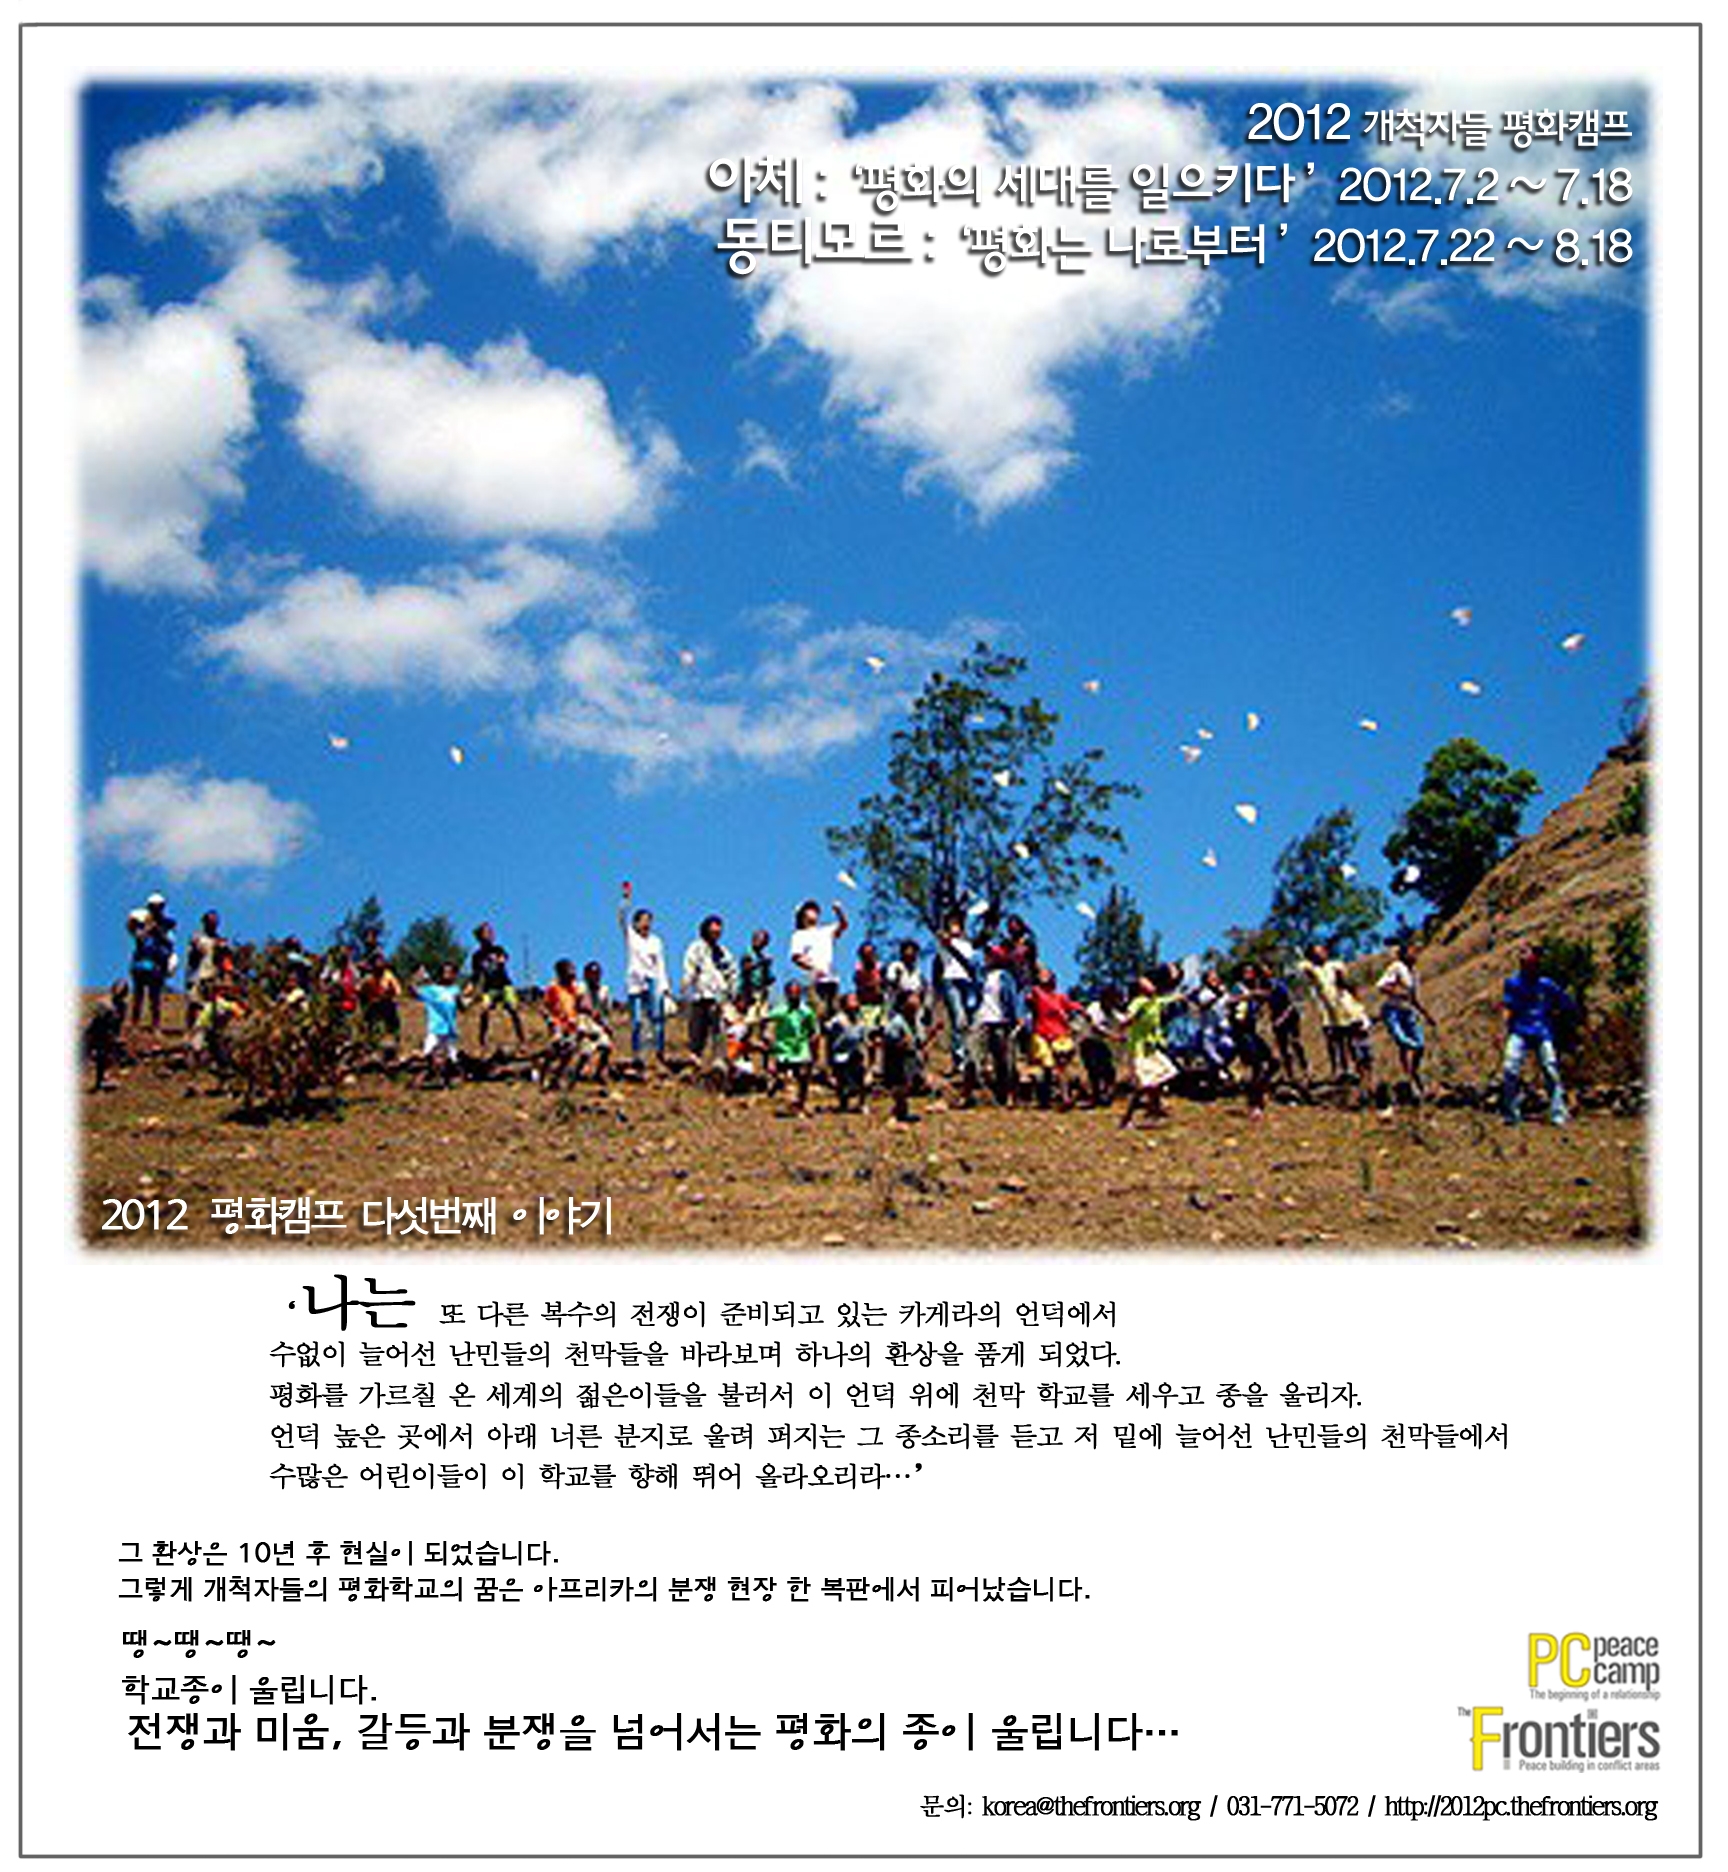 The 5th story_korean.JPG